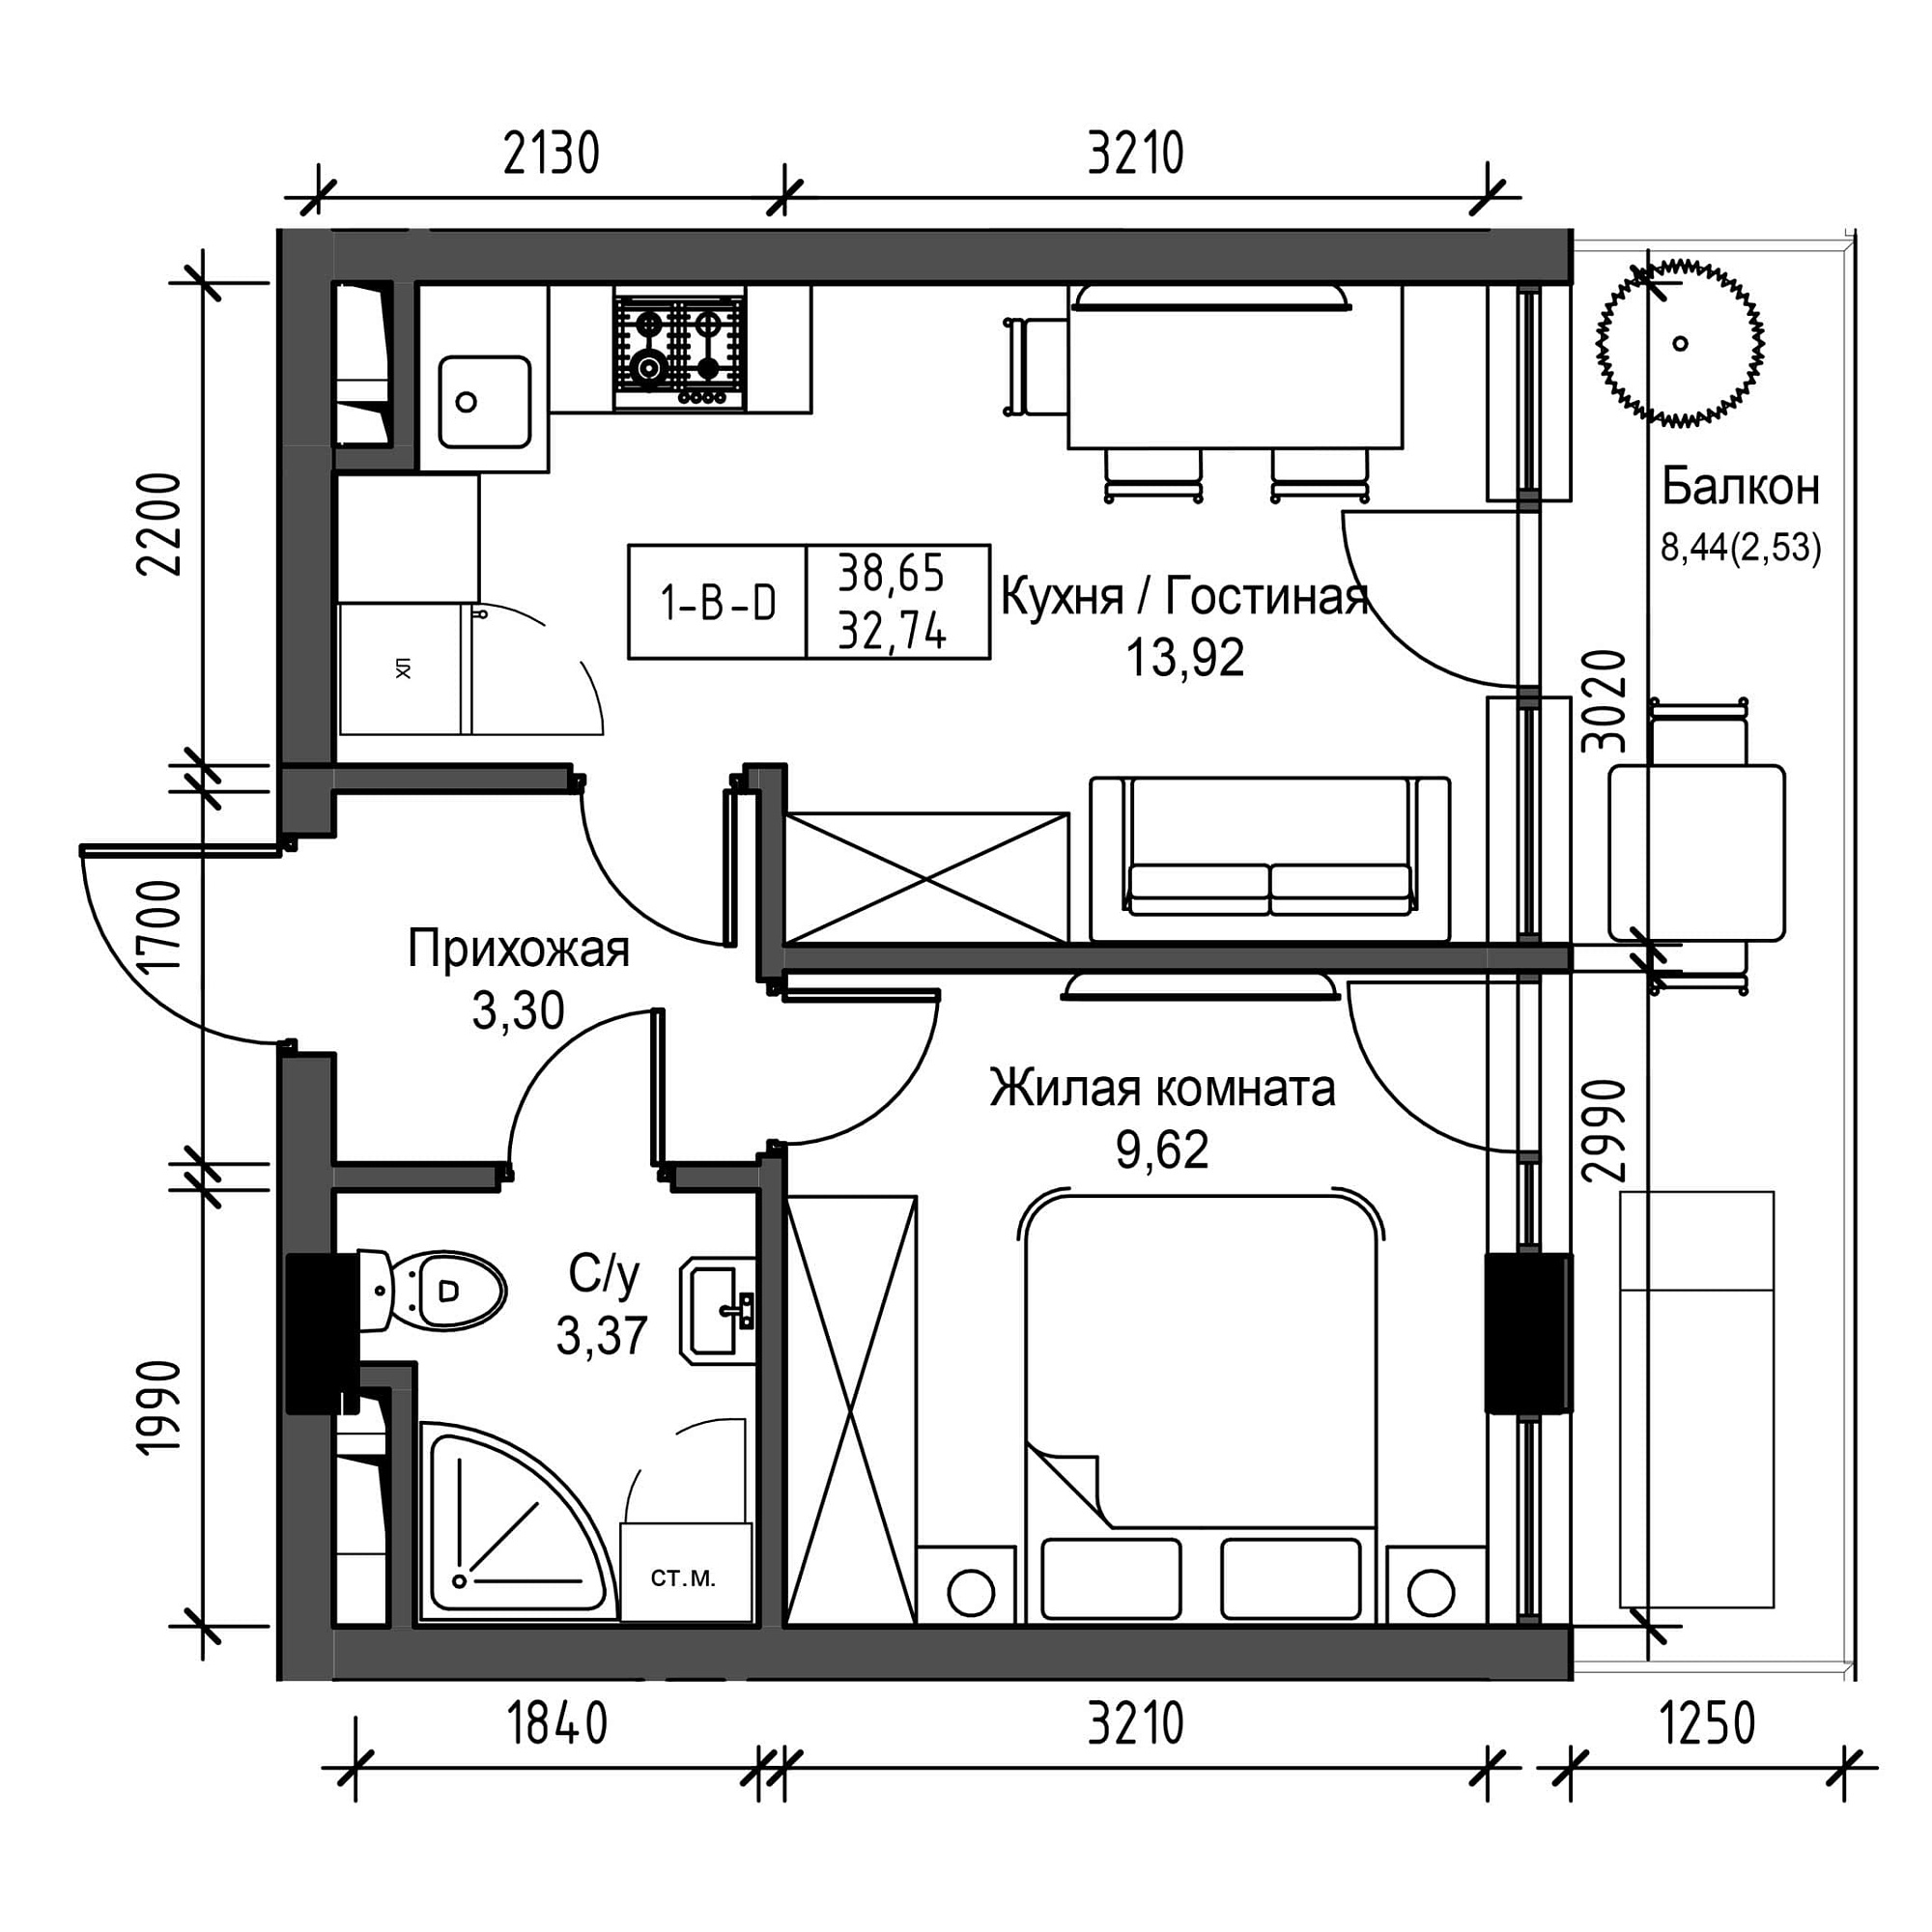 Planning 1-rm flats area 32.74m2, UM-001-05/0022.